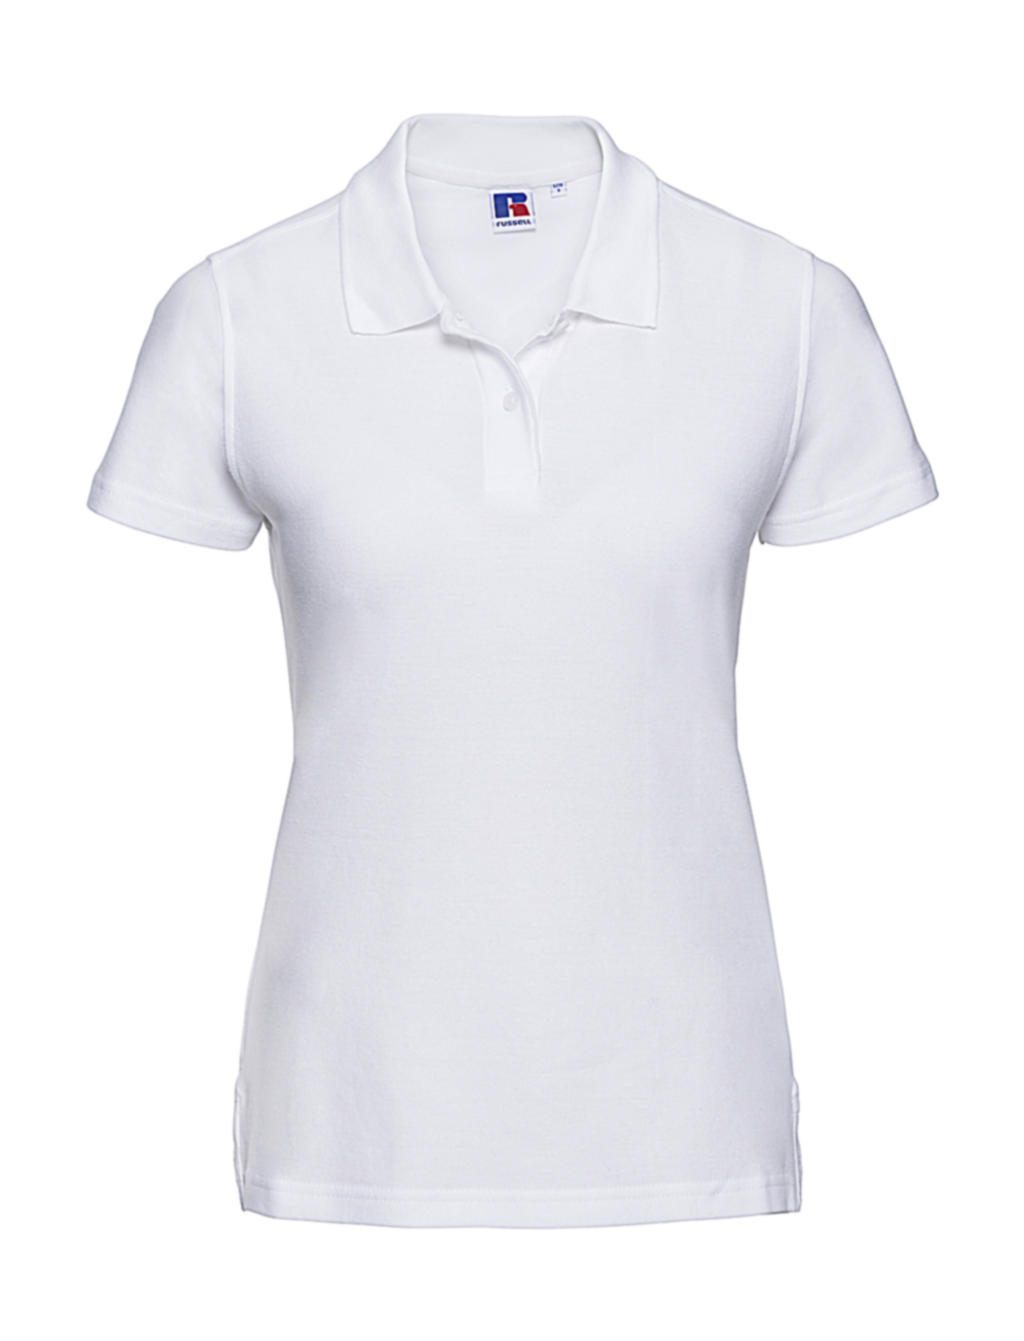  Ladies Ultimate Cotton Polo in Farbe White